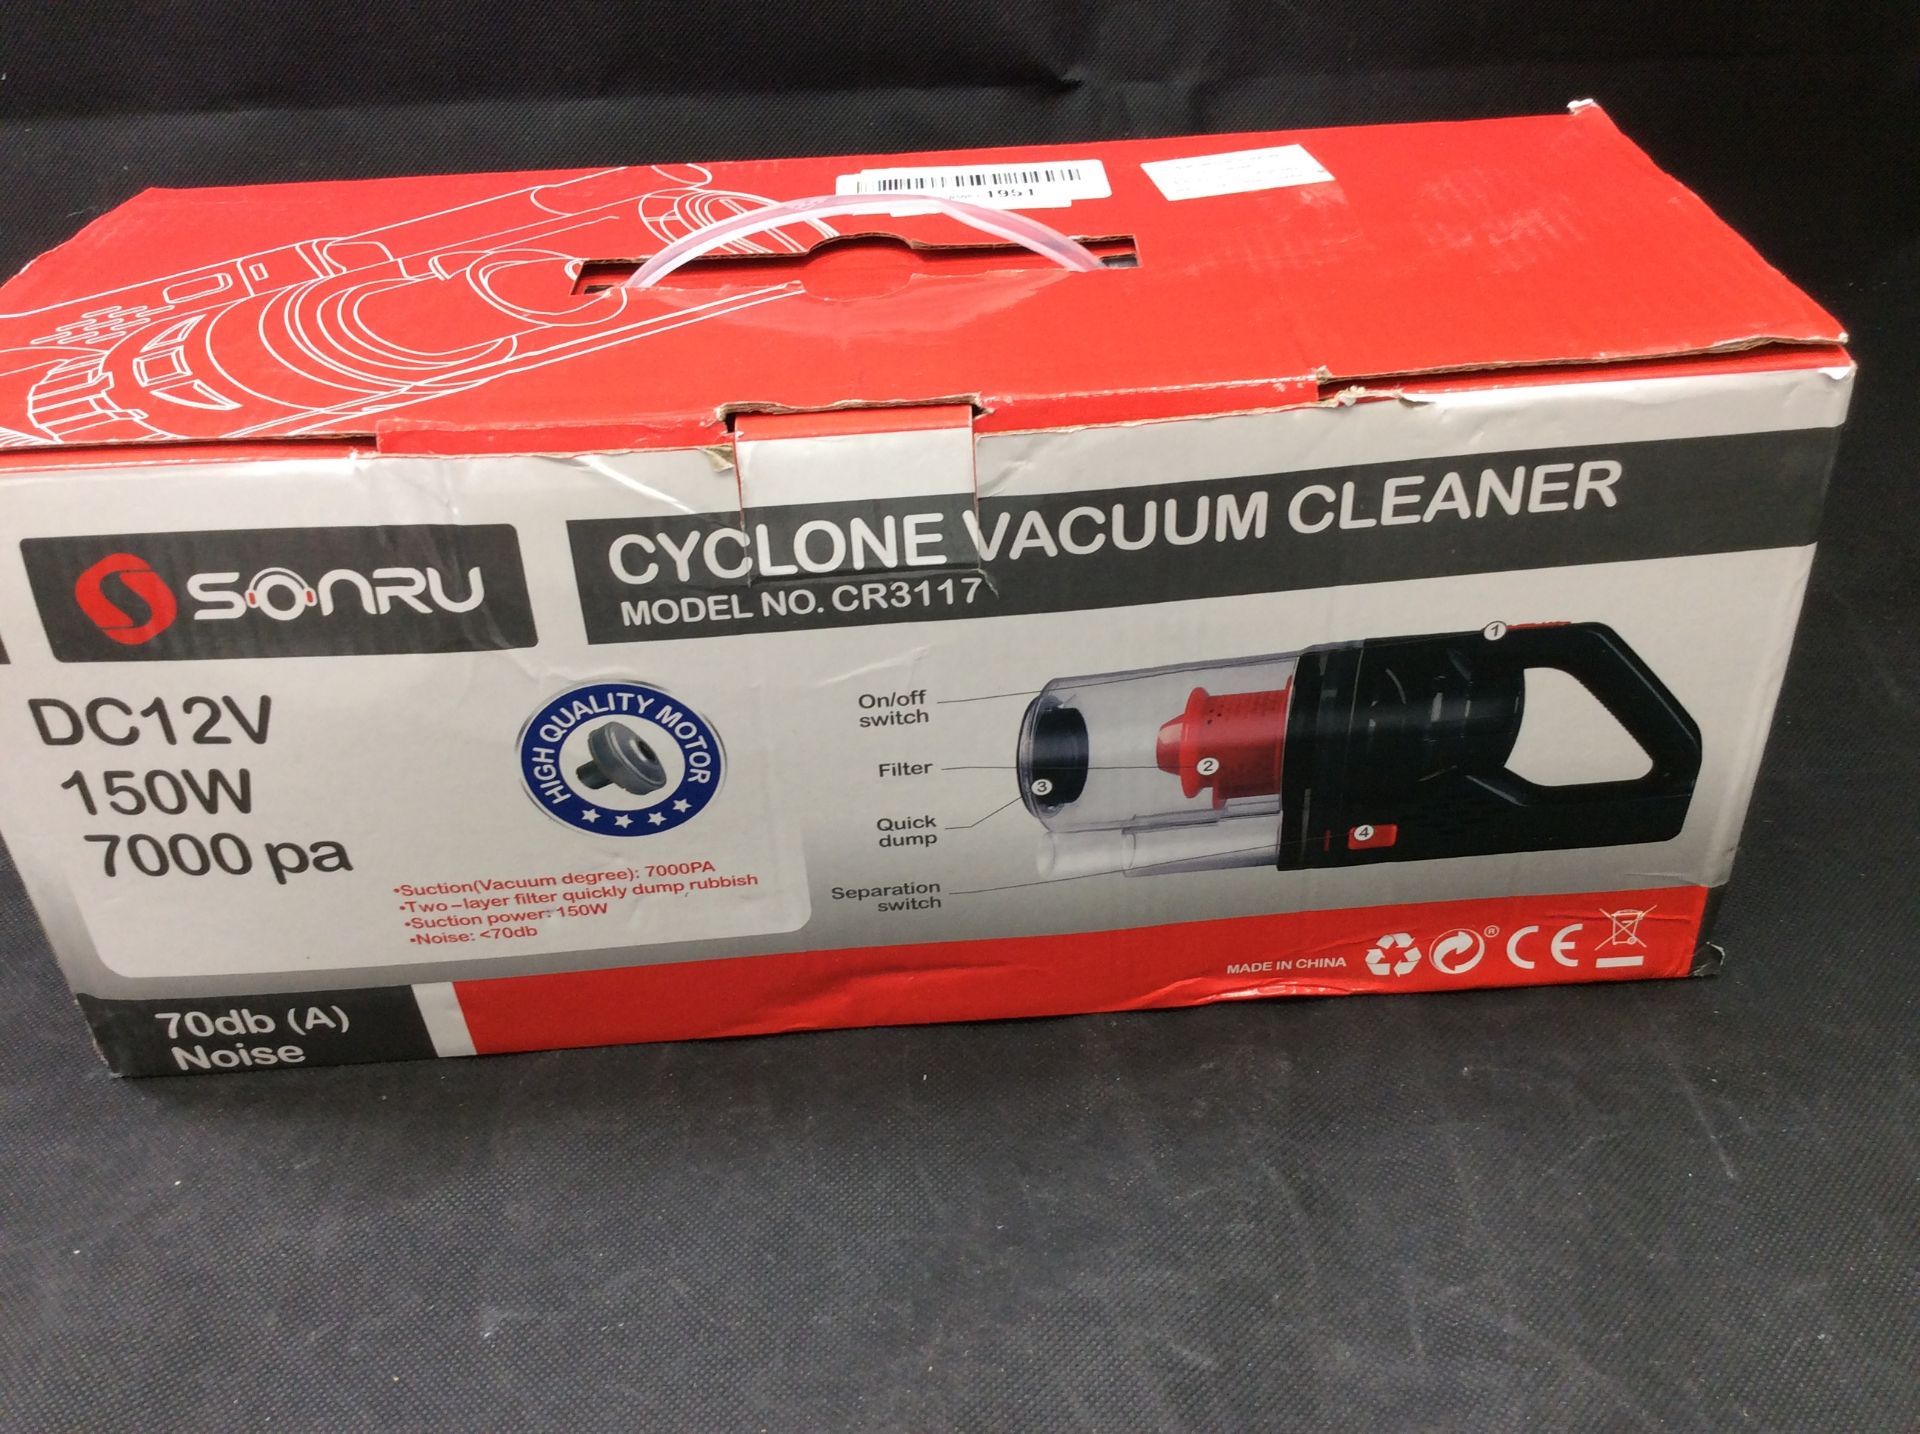 Sonru cyclone vacuum cleaner CR3117 - Image 3 of 3